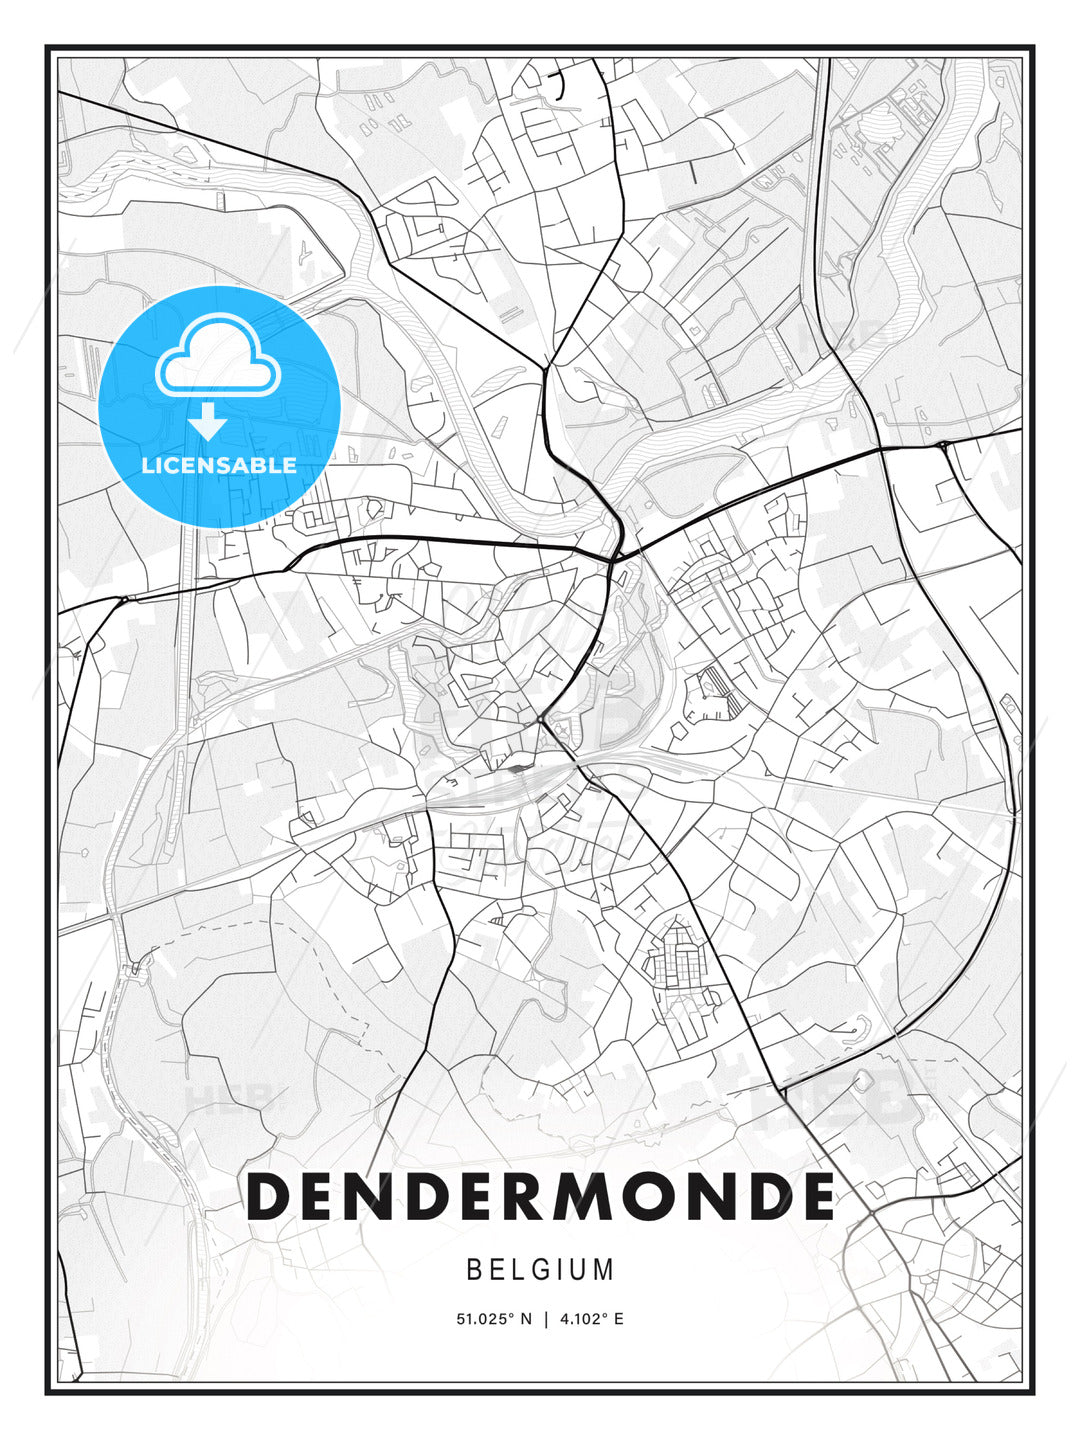 Dendermonde, Belgium, Modern Print Template in Various Formats - HEBSTREITS Sketches